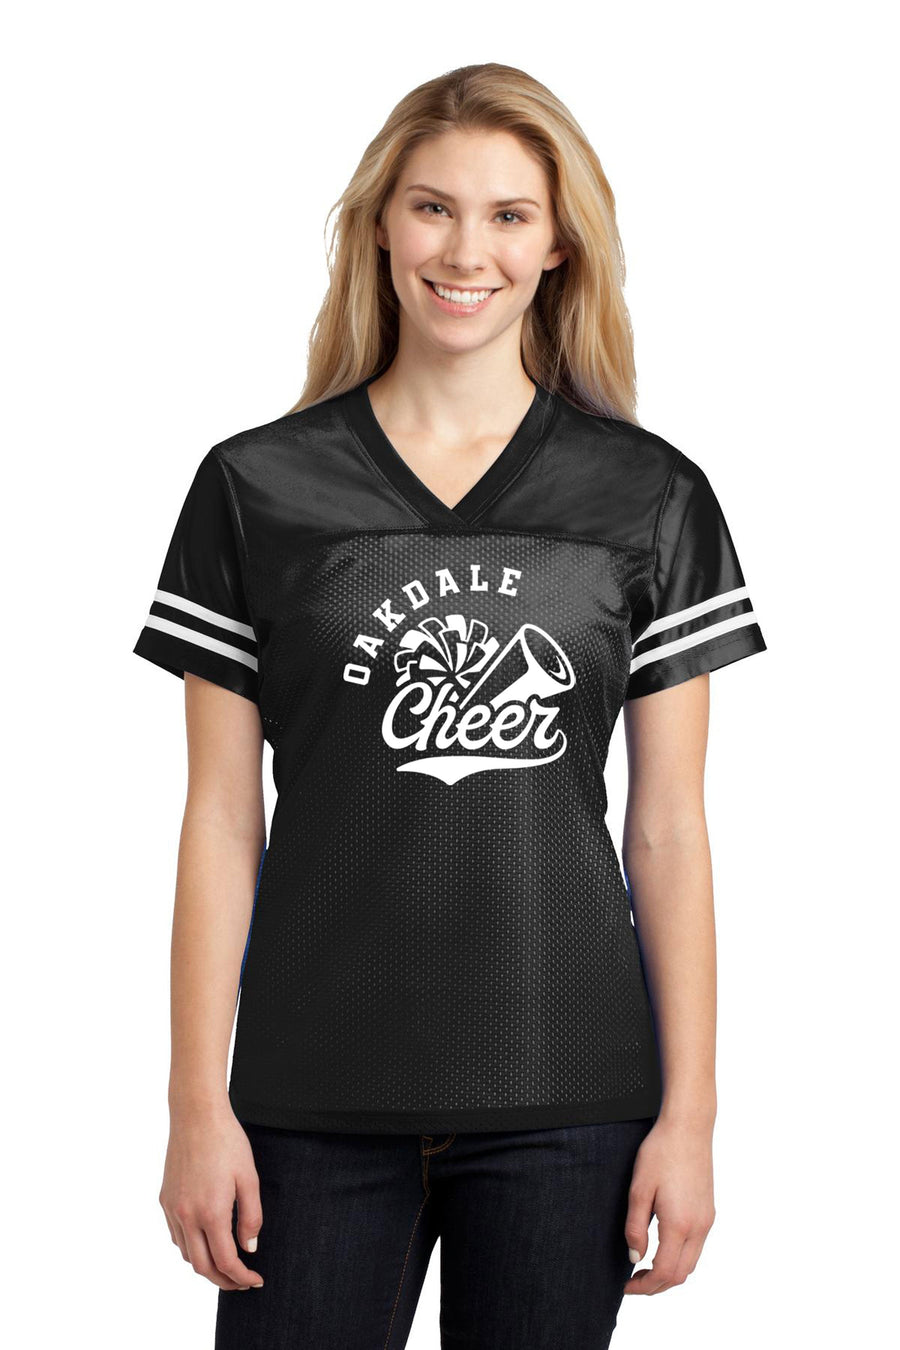 Oakdale Bears Cheer Jersey Full Length (OHS)